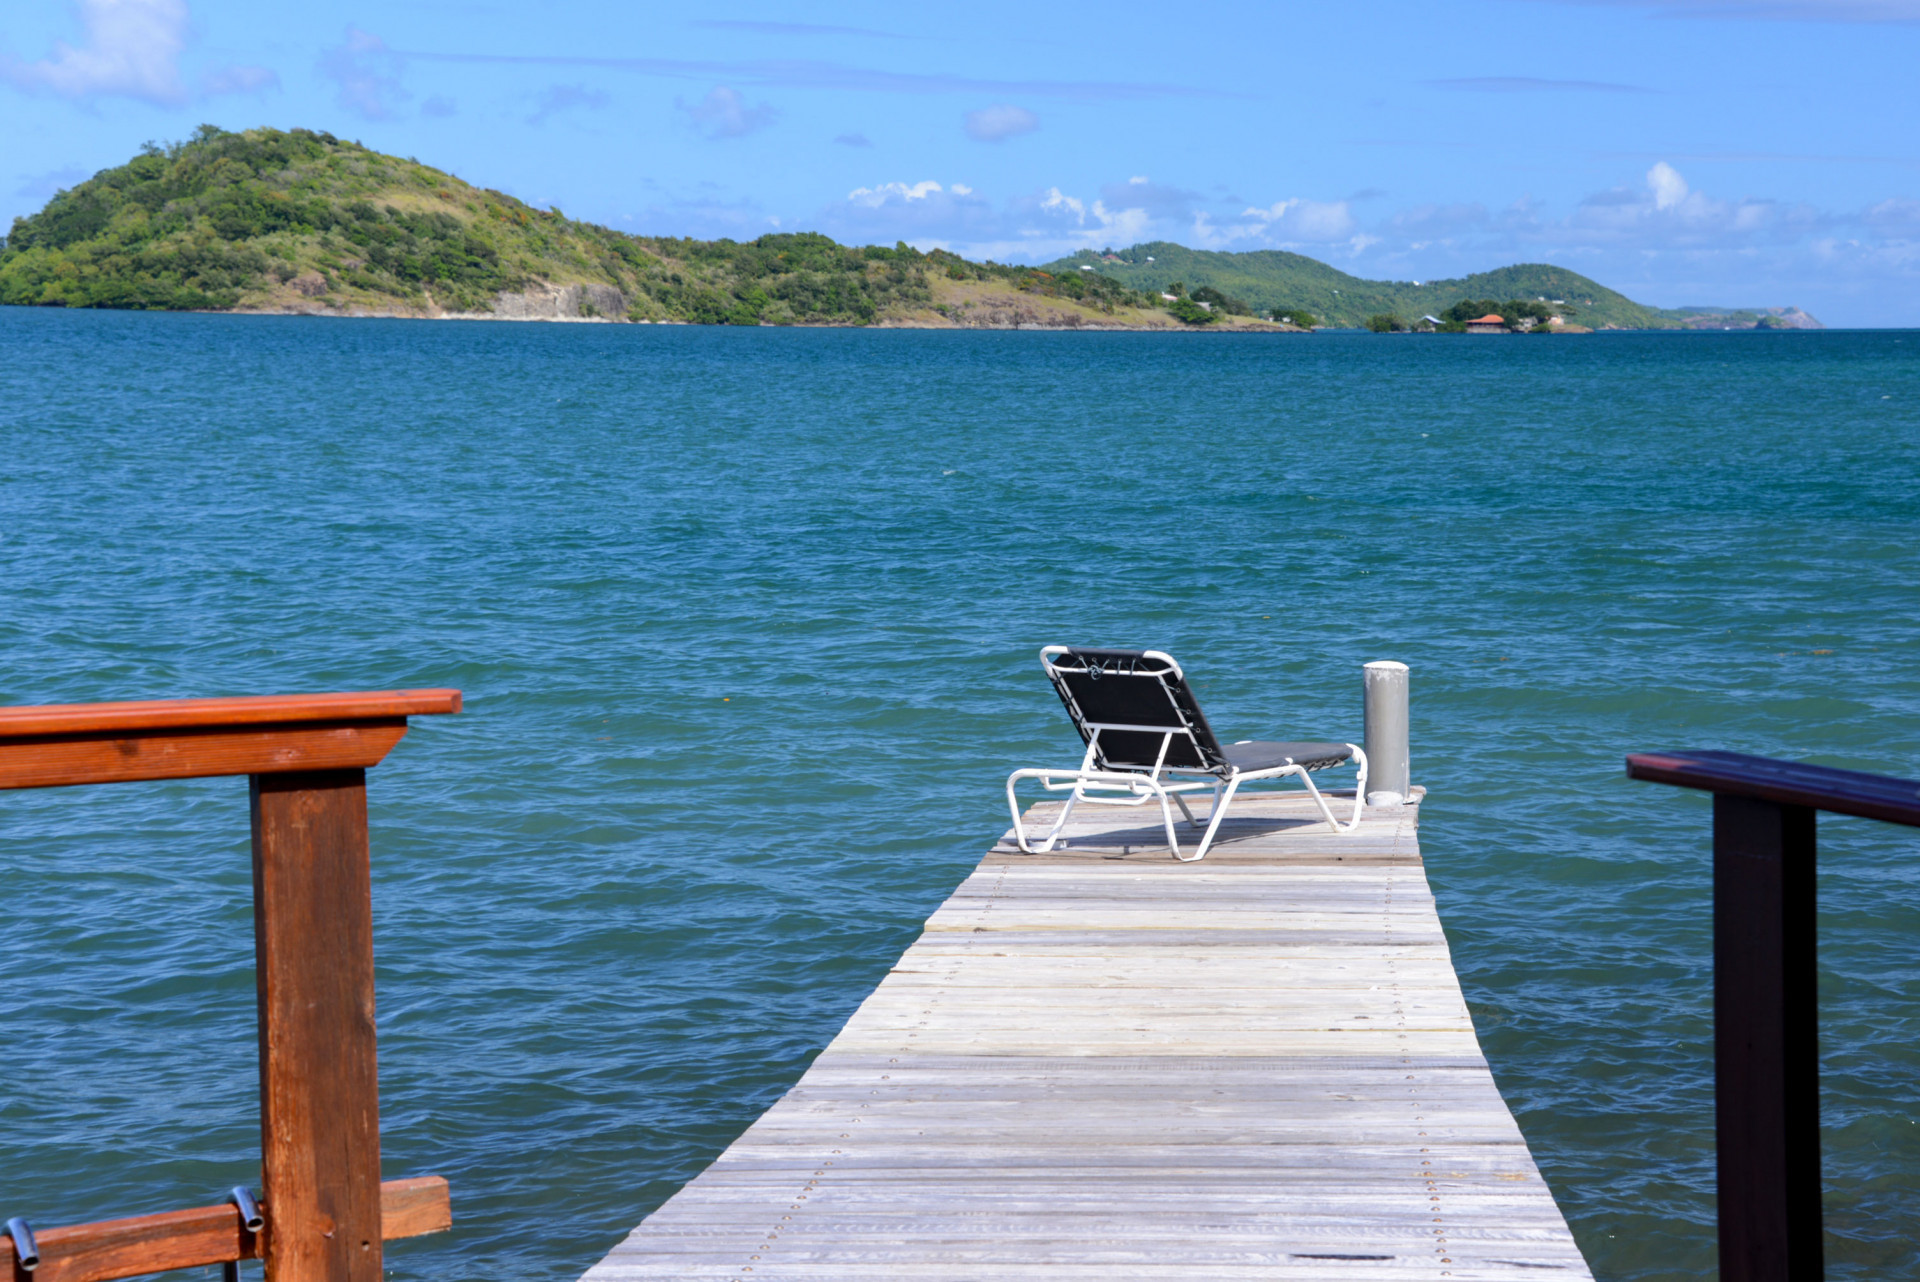 TI PONTON location Martinique sur la mer Le François - Le ponton privé de la Villa